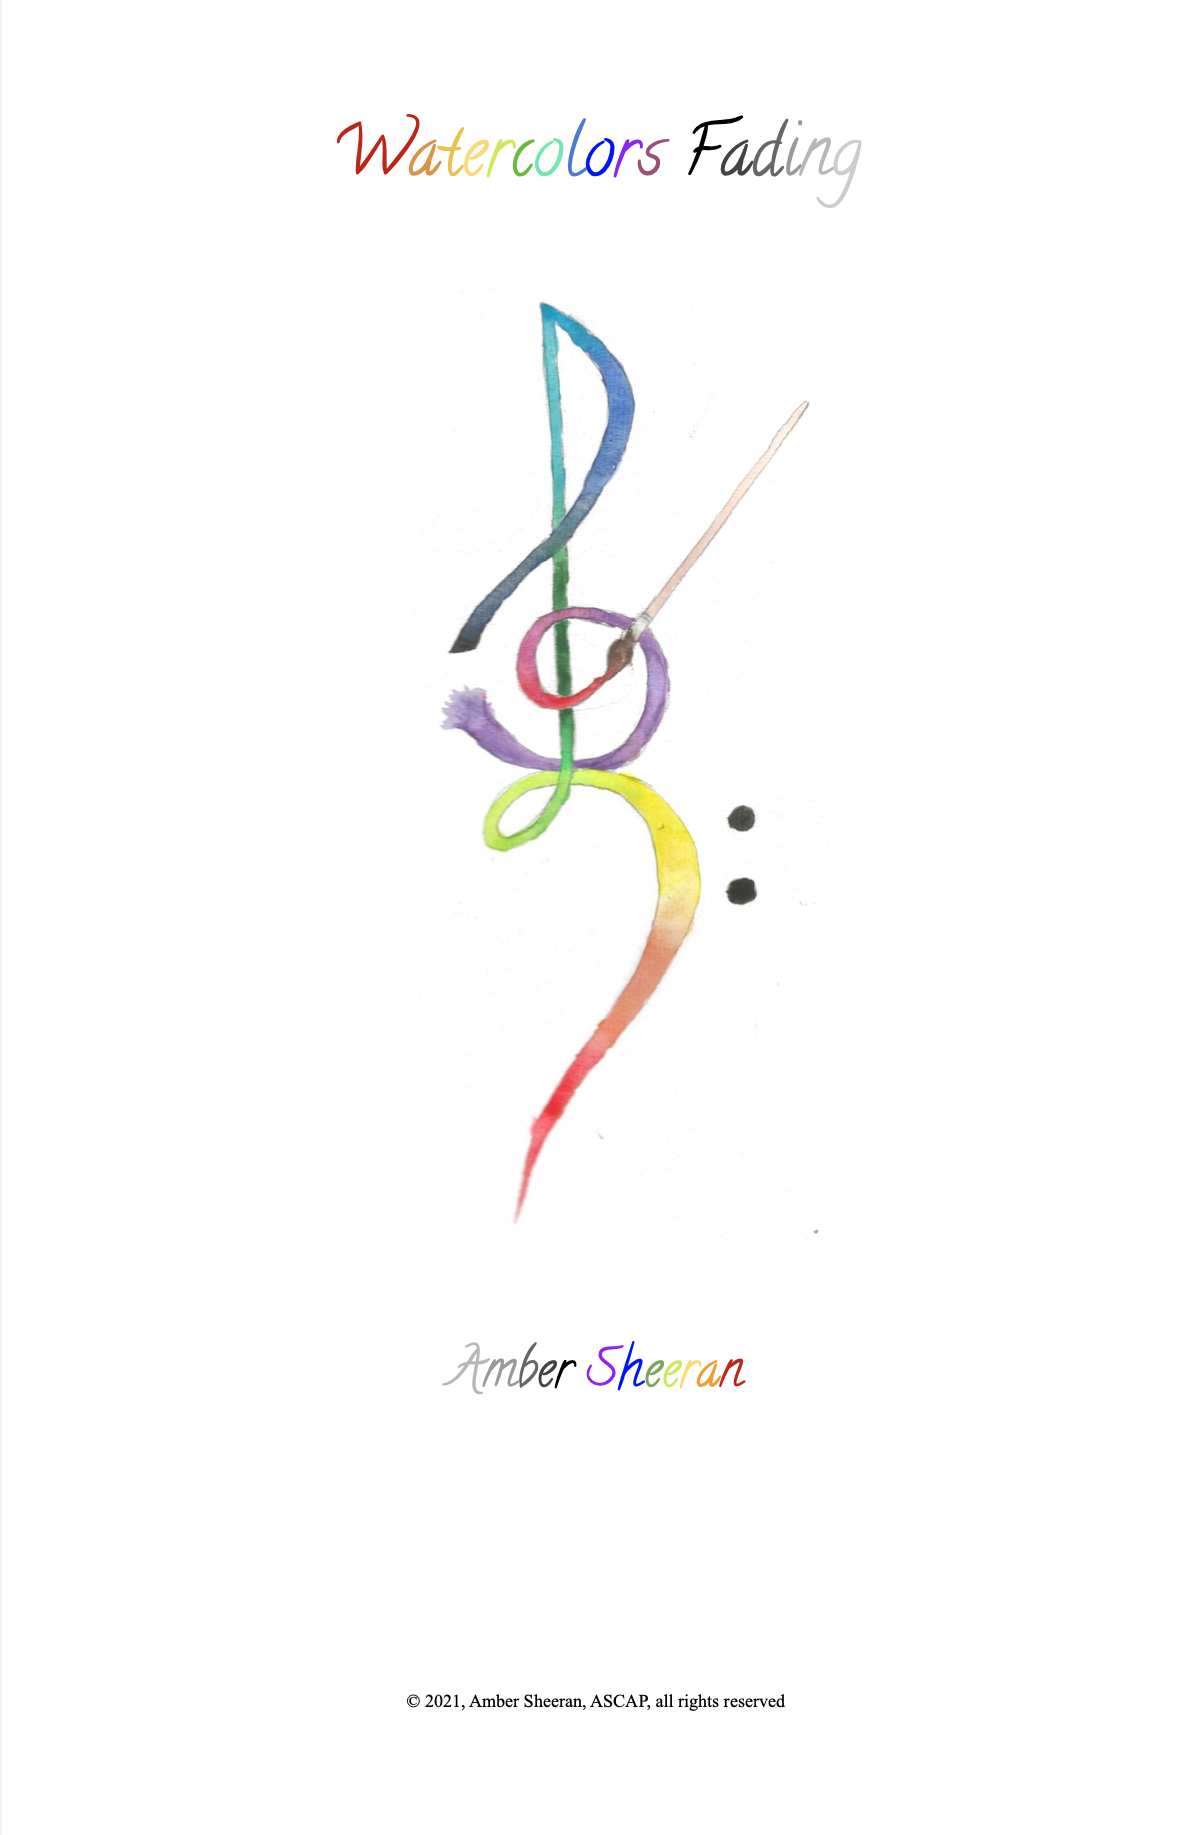 Watercolors Fading by Amber Sheeran